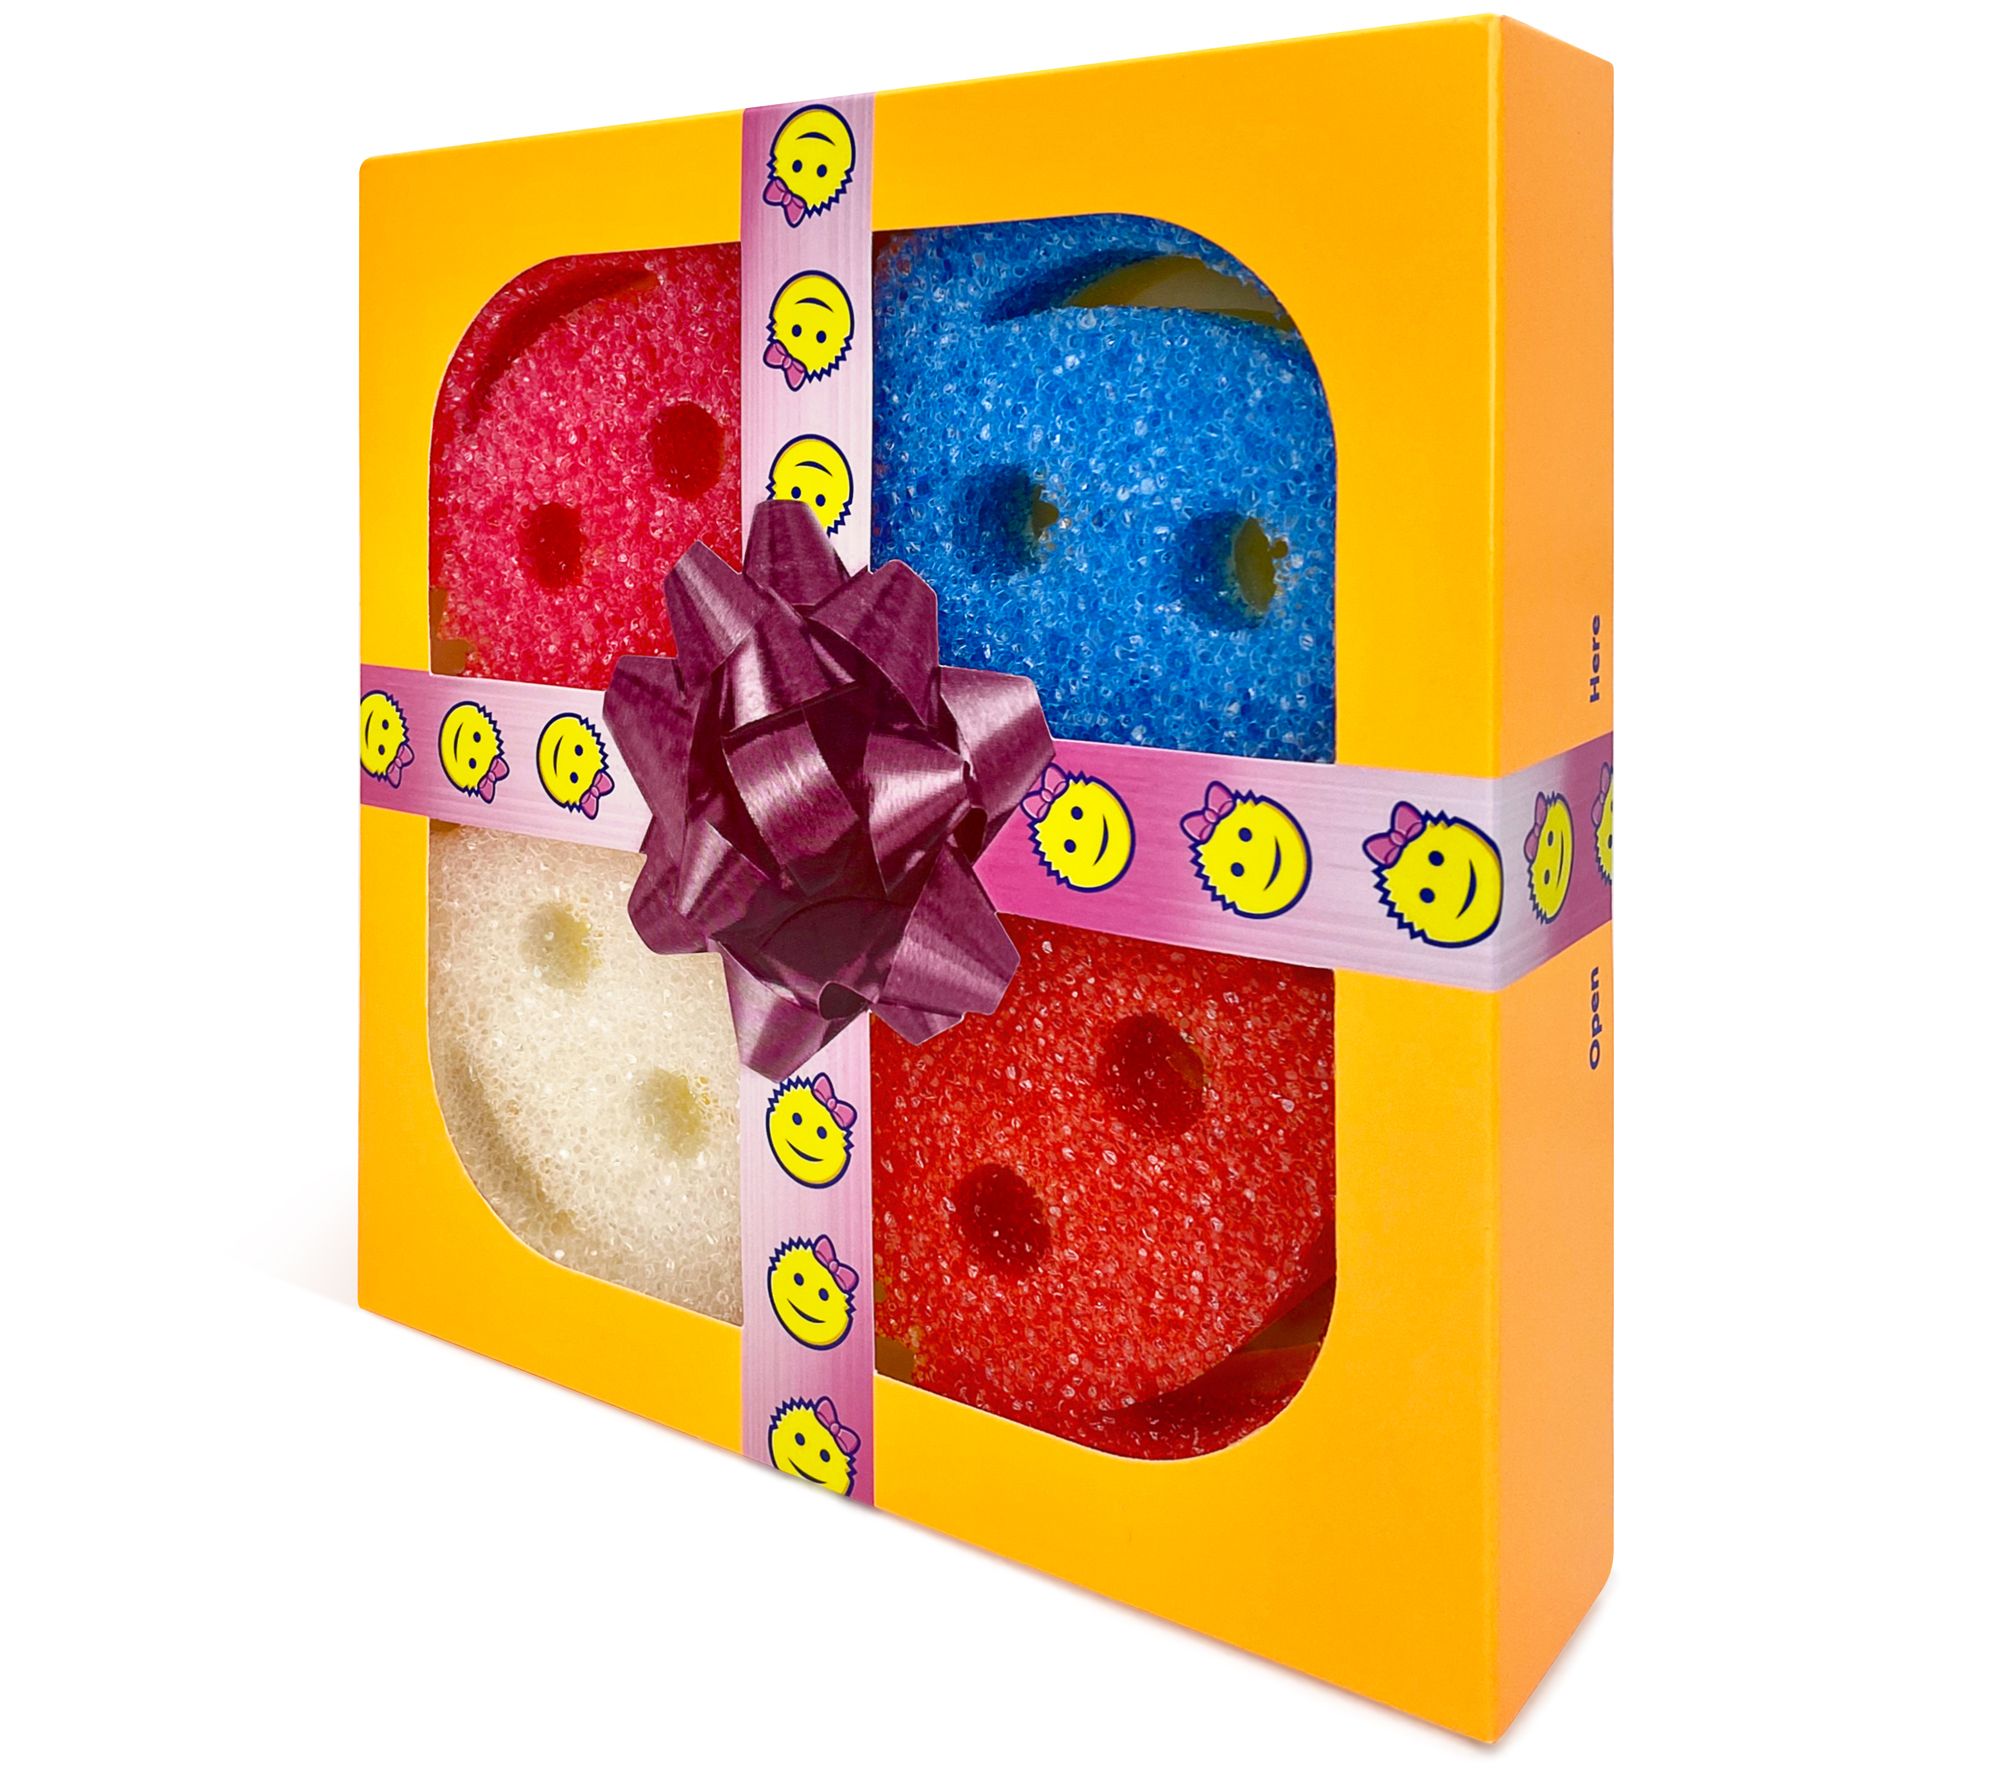 Scrub Daddy Gift Set - 3 pack Scrub Daddy with holder – The Pink Stuff